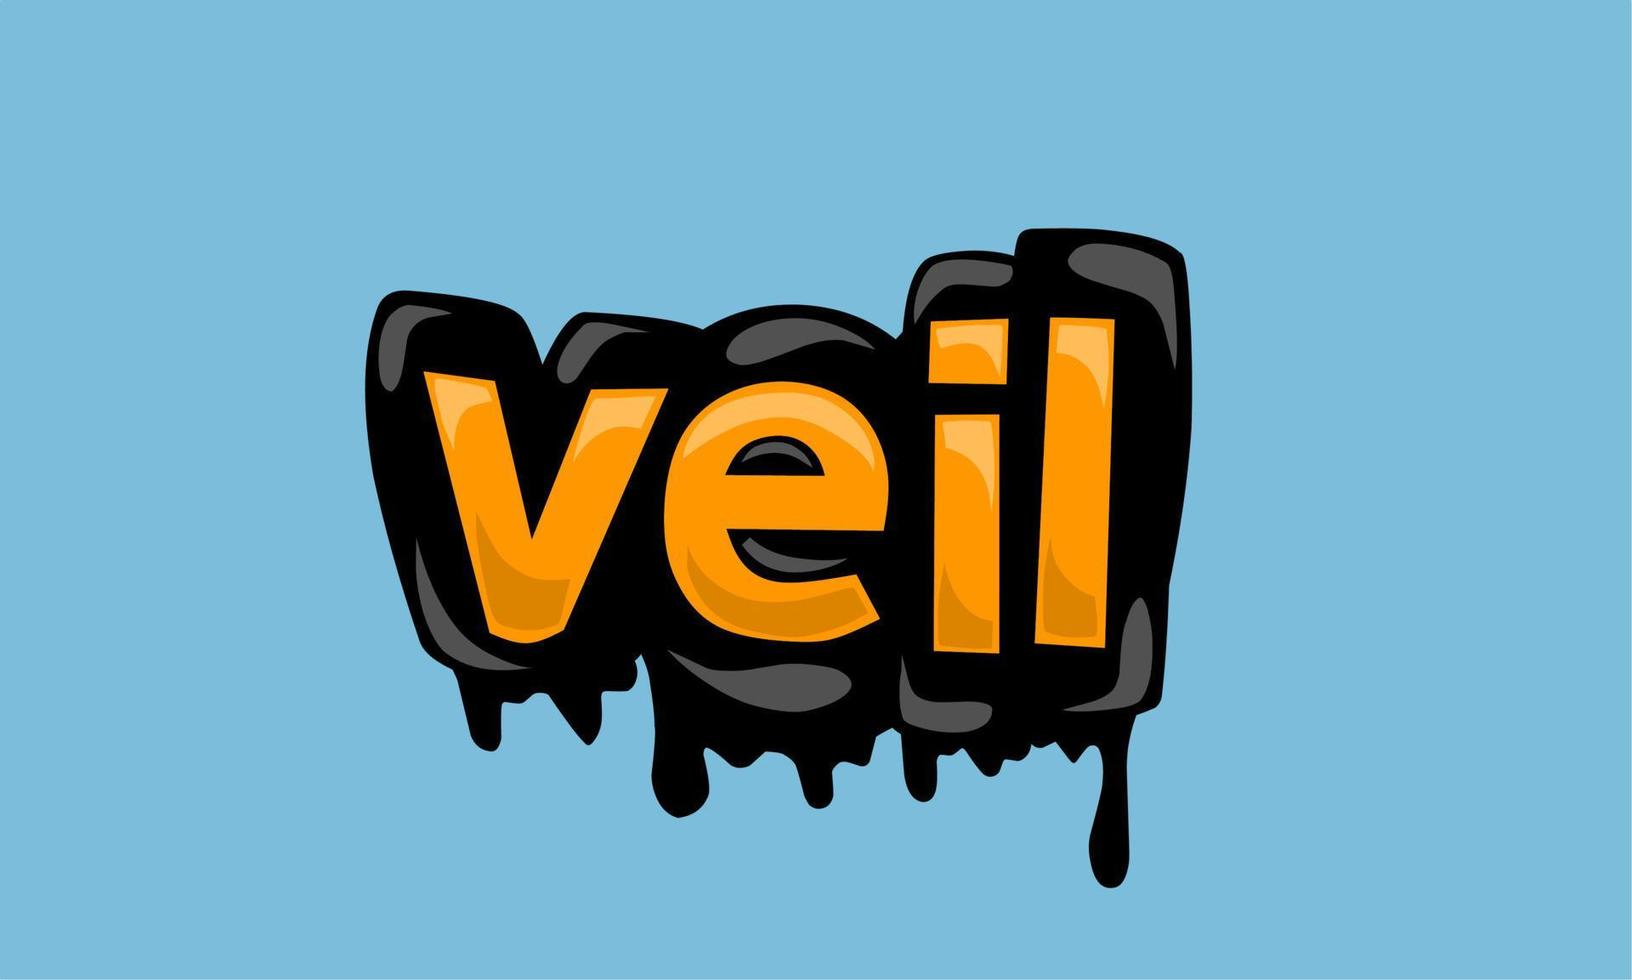 VEIL writing vector design on blue background